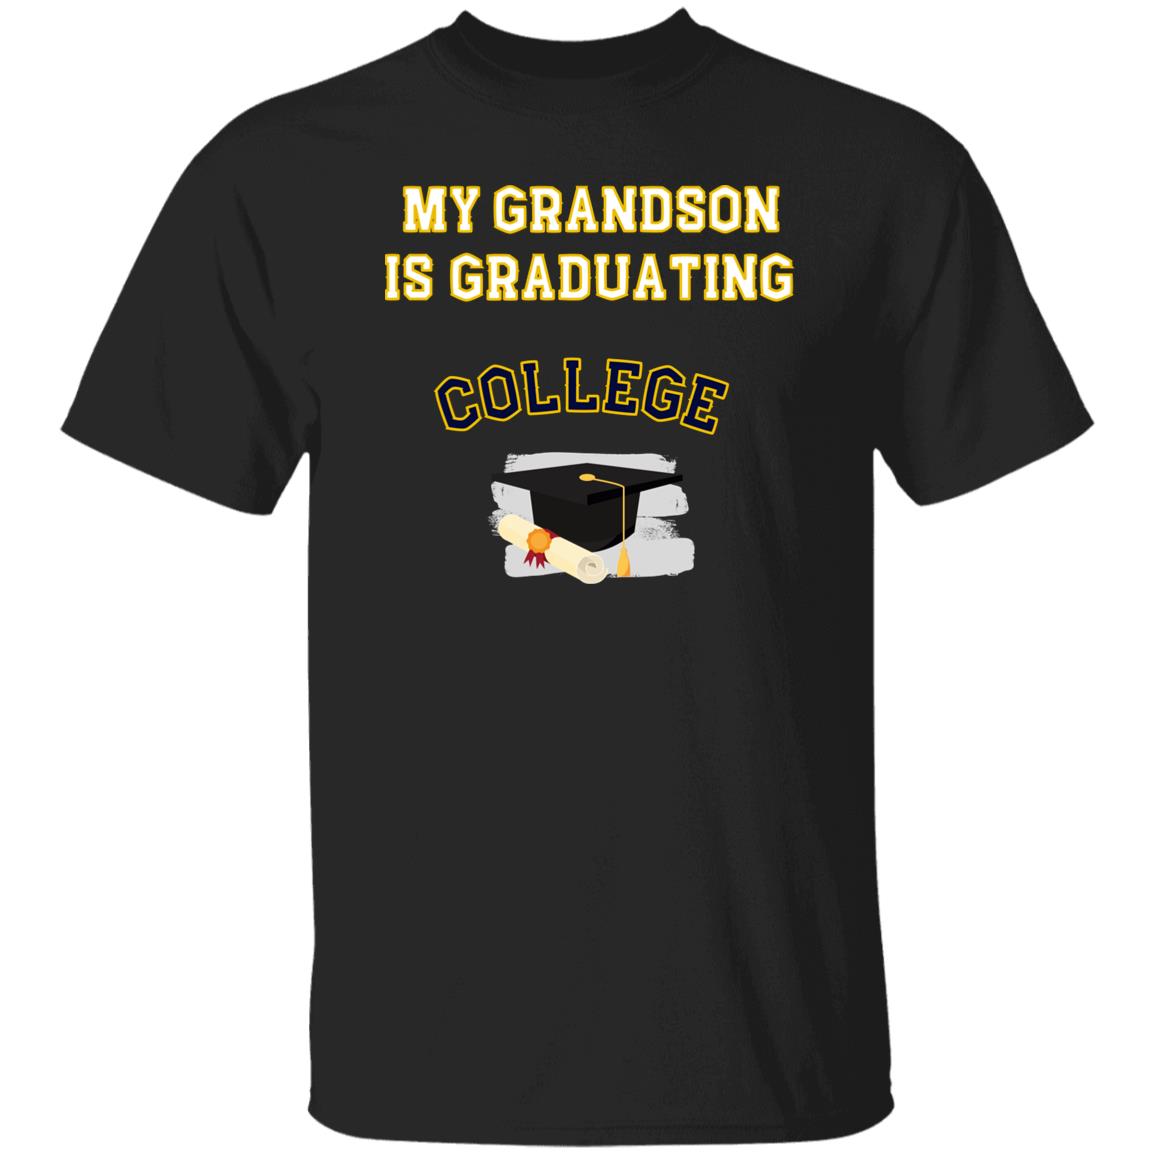 My Grandson is graduating College Tshirt